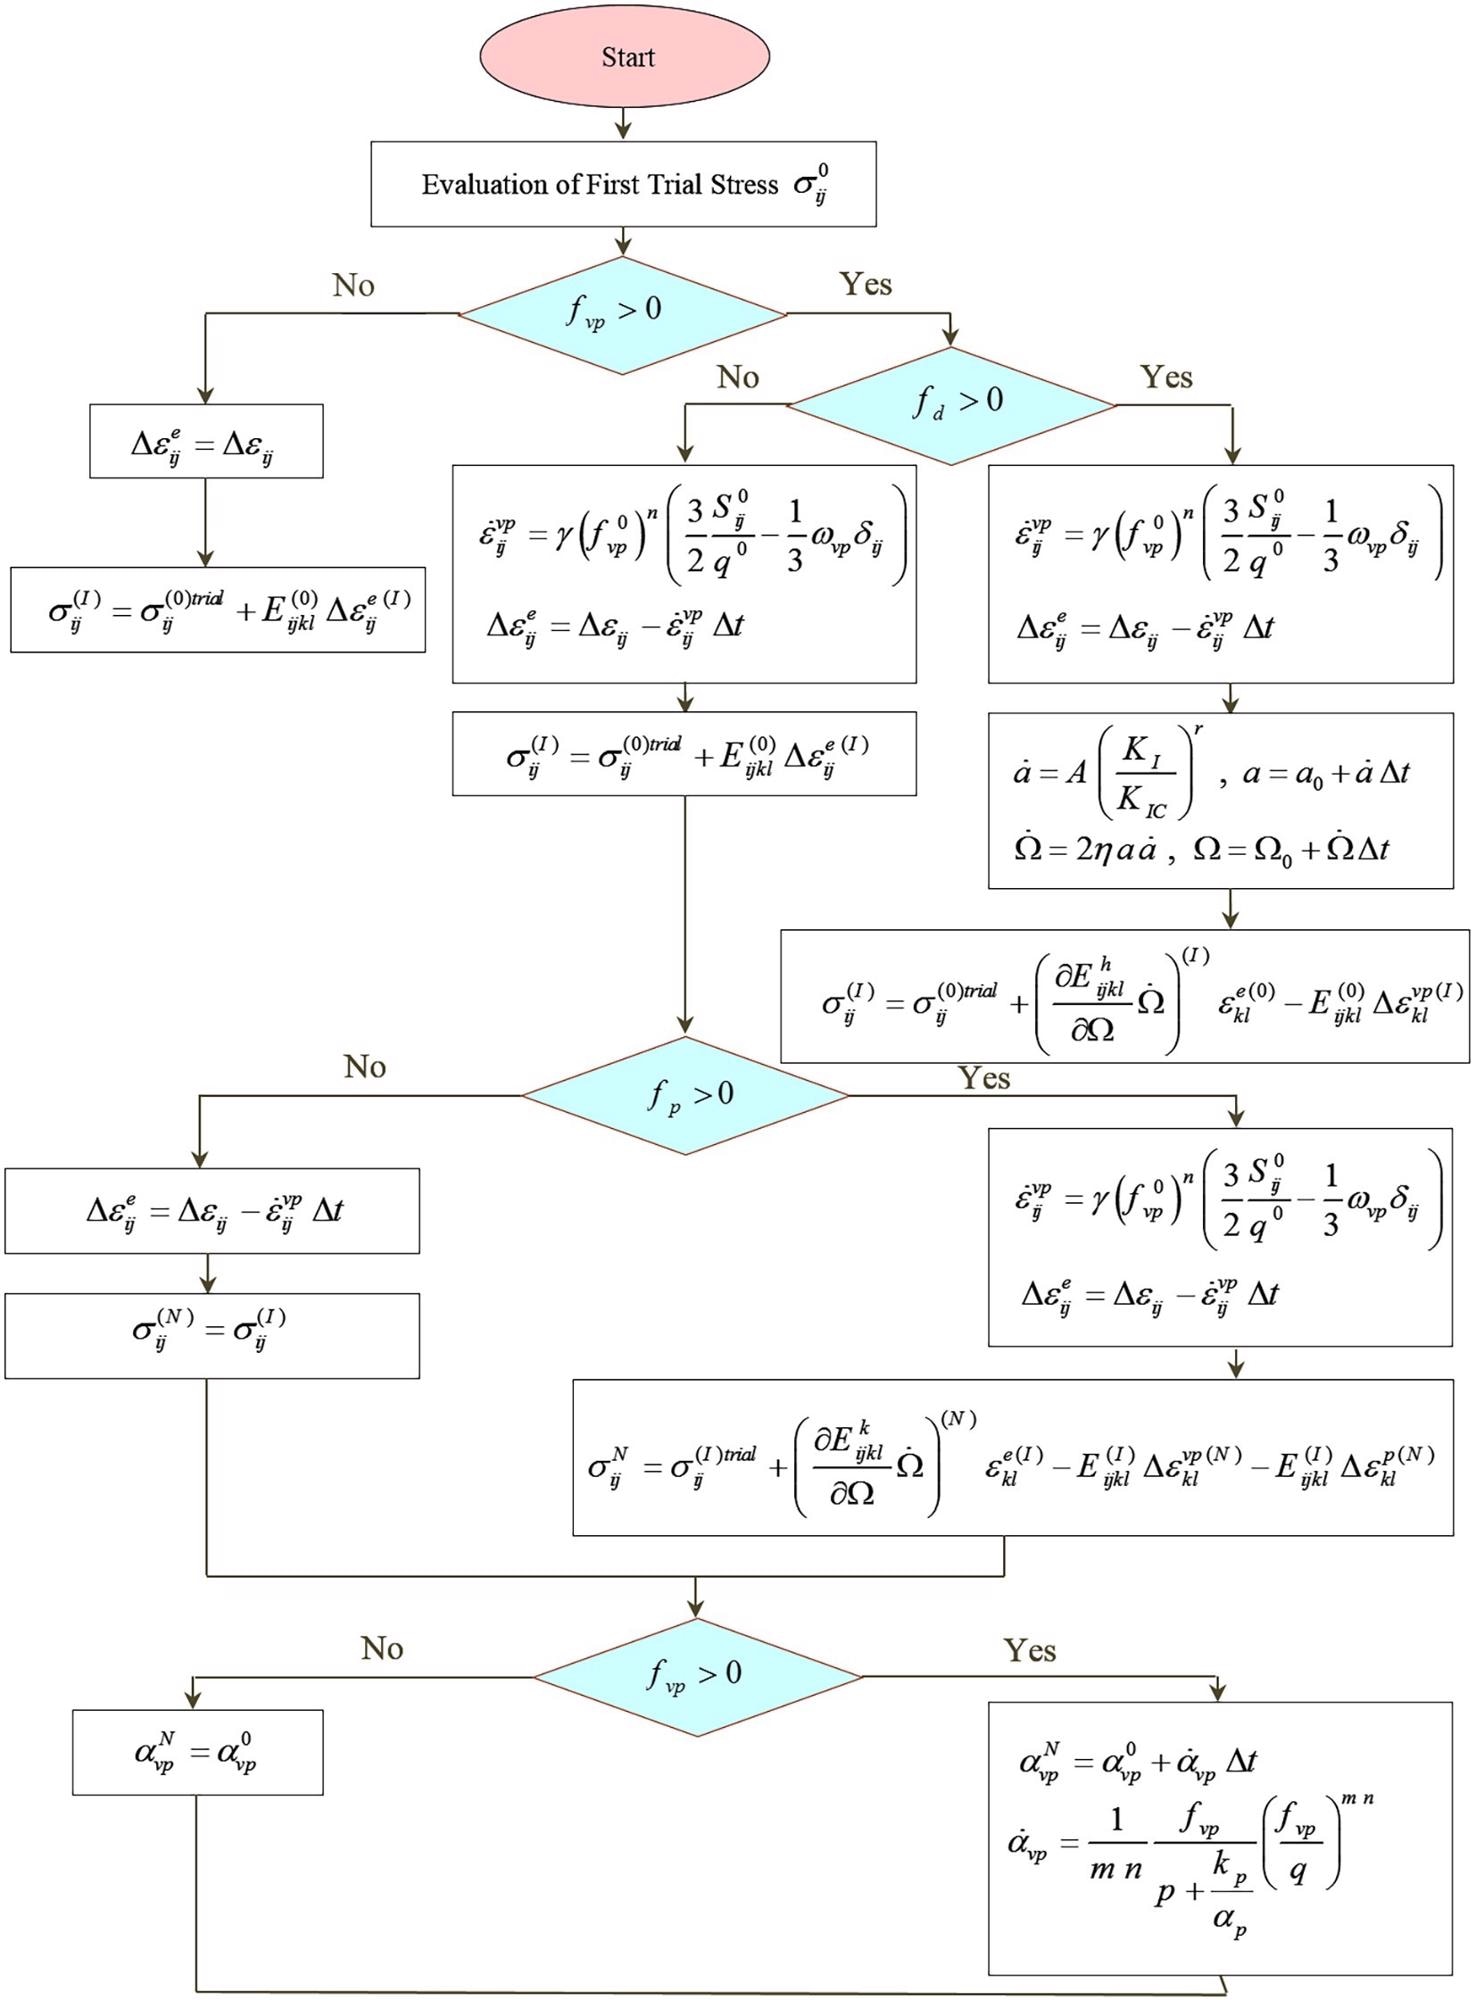 Computational algorithm of the mathematical model.